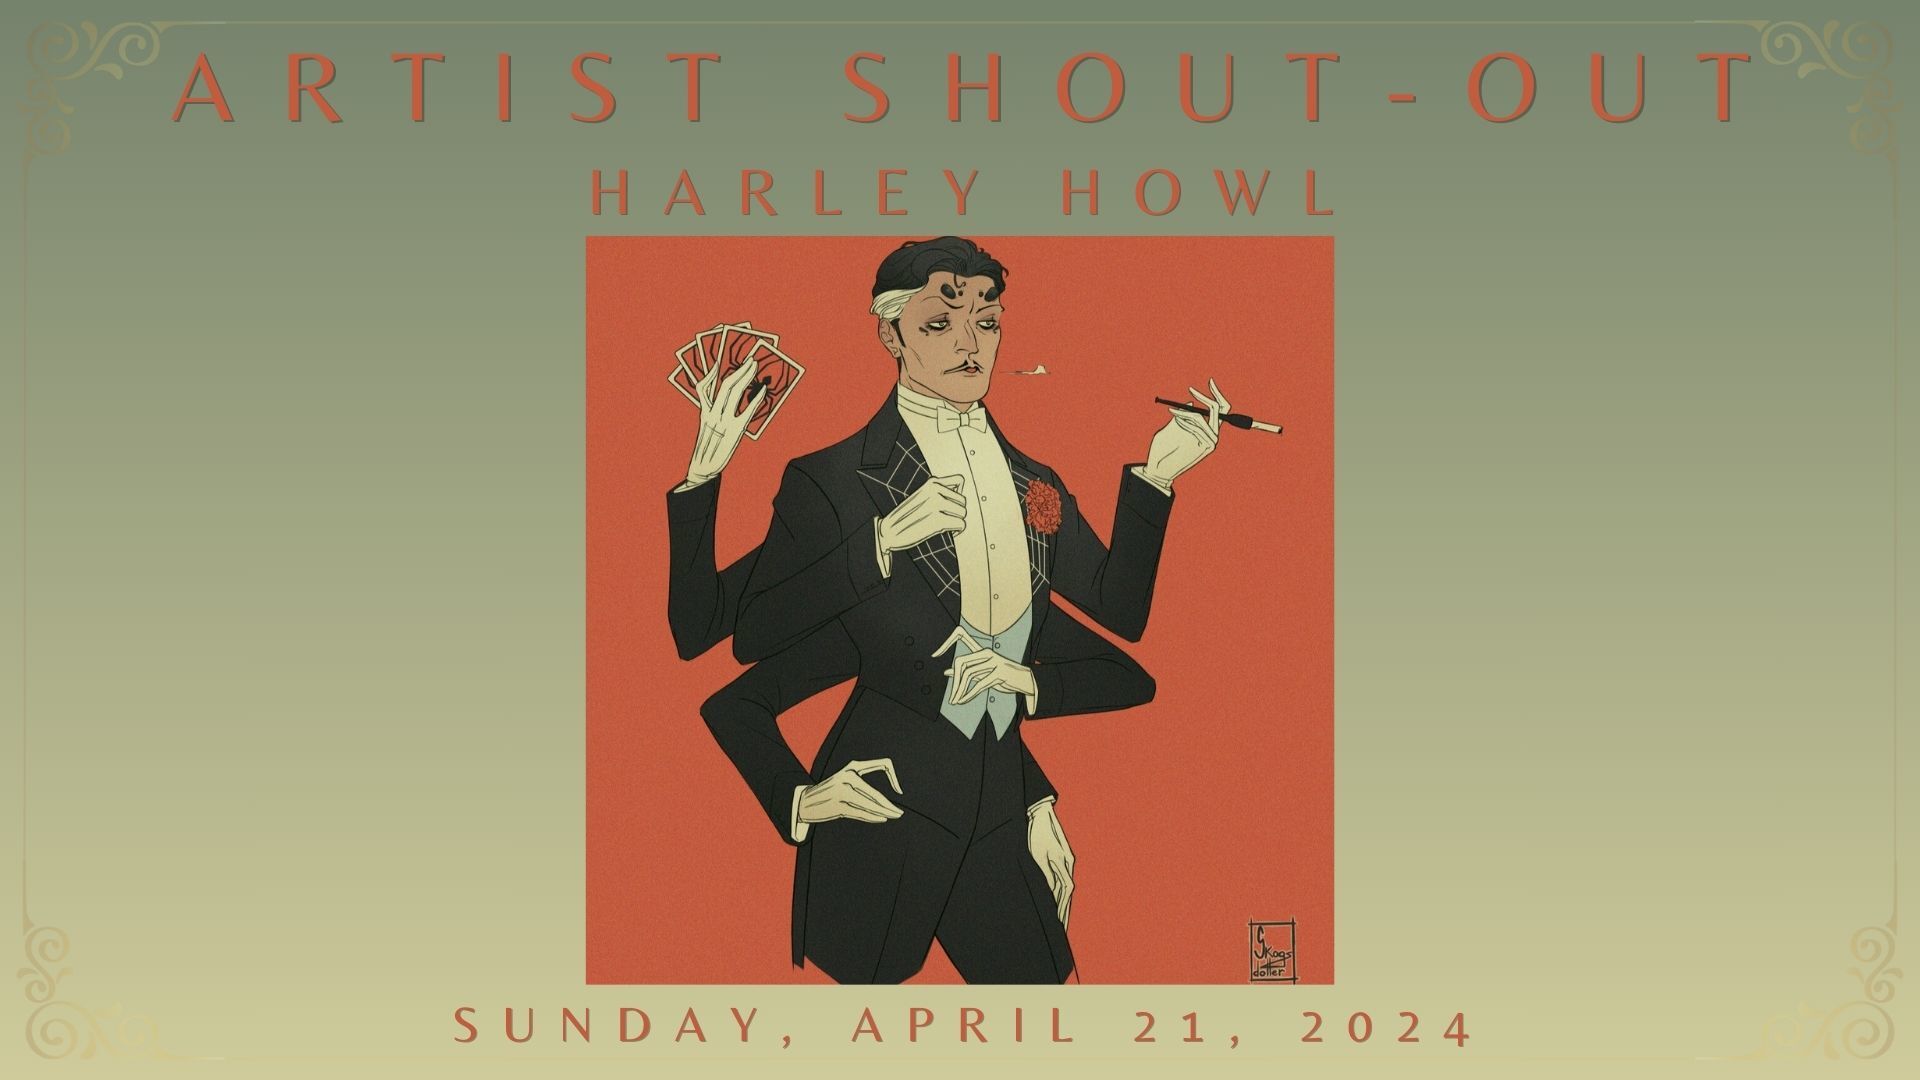 ARTIST SHOUT-OUT: Sunday, April 21, 2024